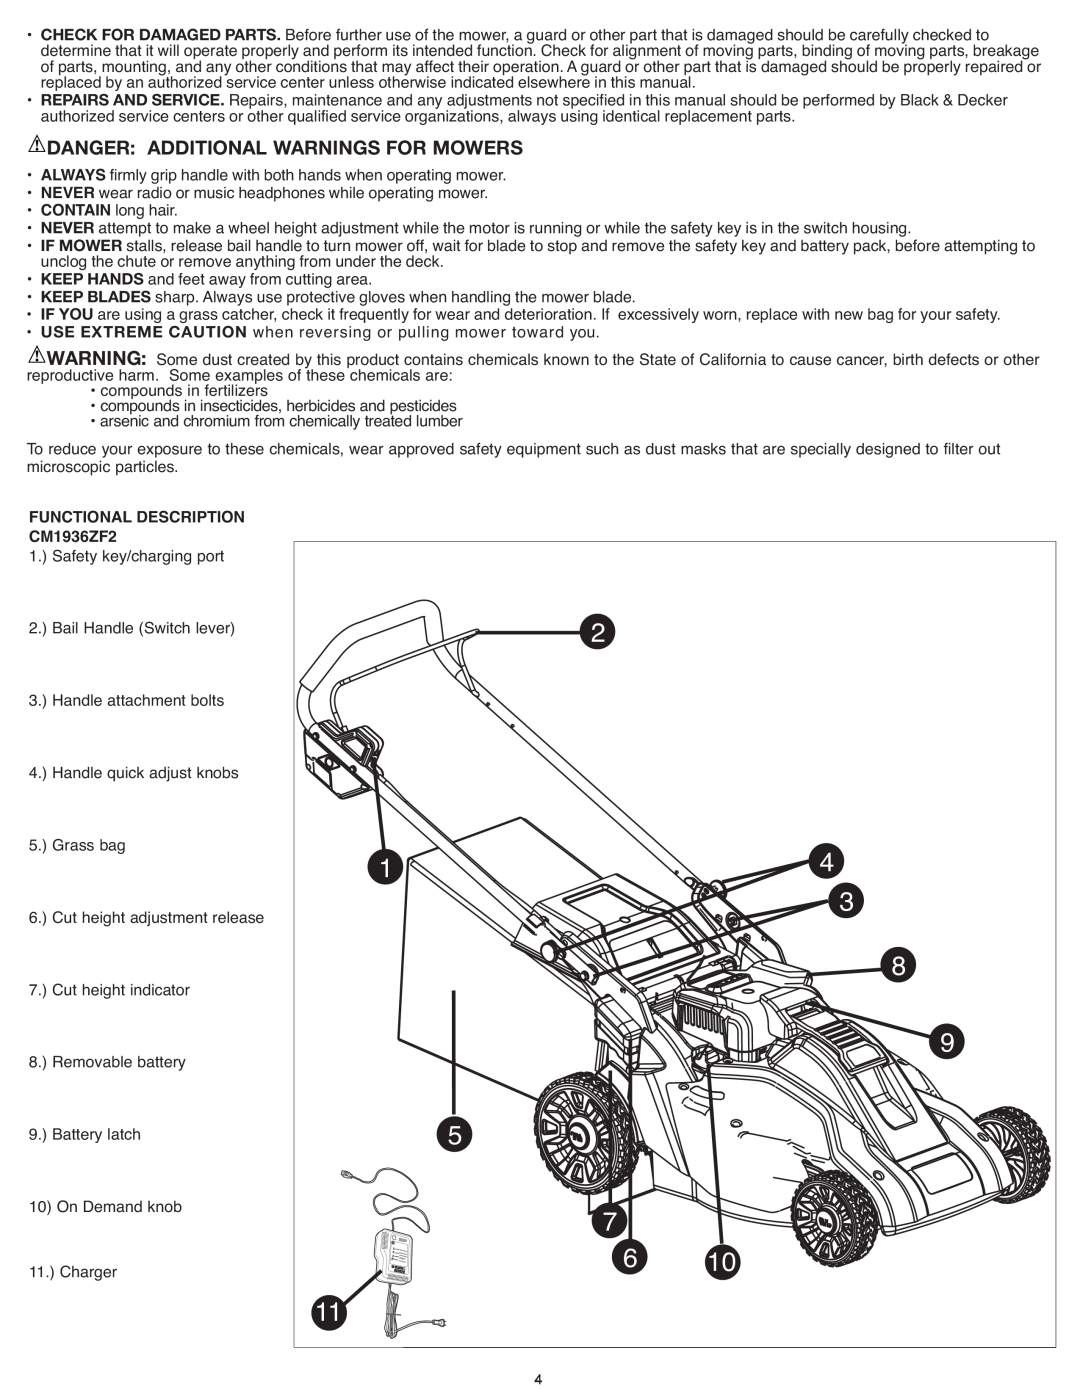 Black & Decker instruction manual Danger Additional Warnings For Mowers, FUNCTIONAL DESCRIPTION CM1936ZF2 